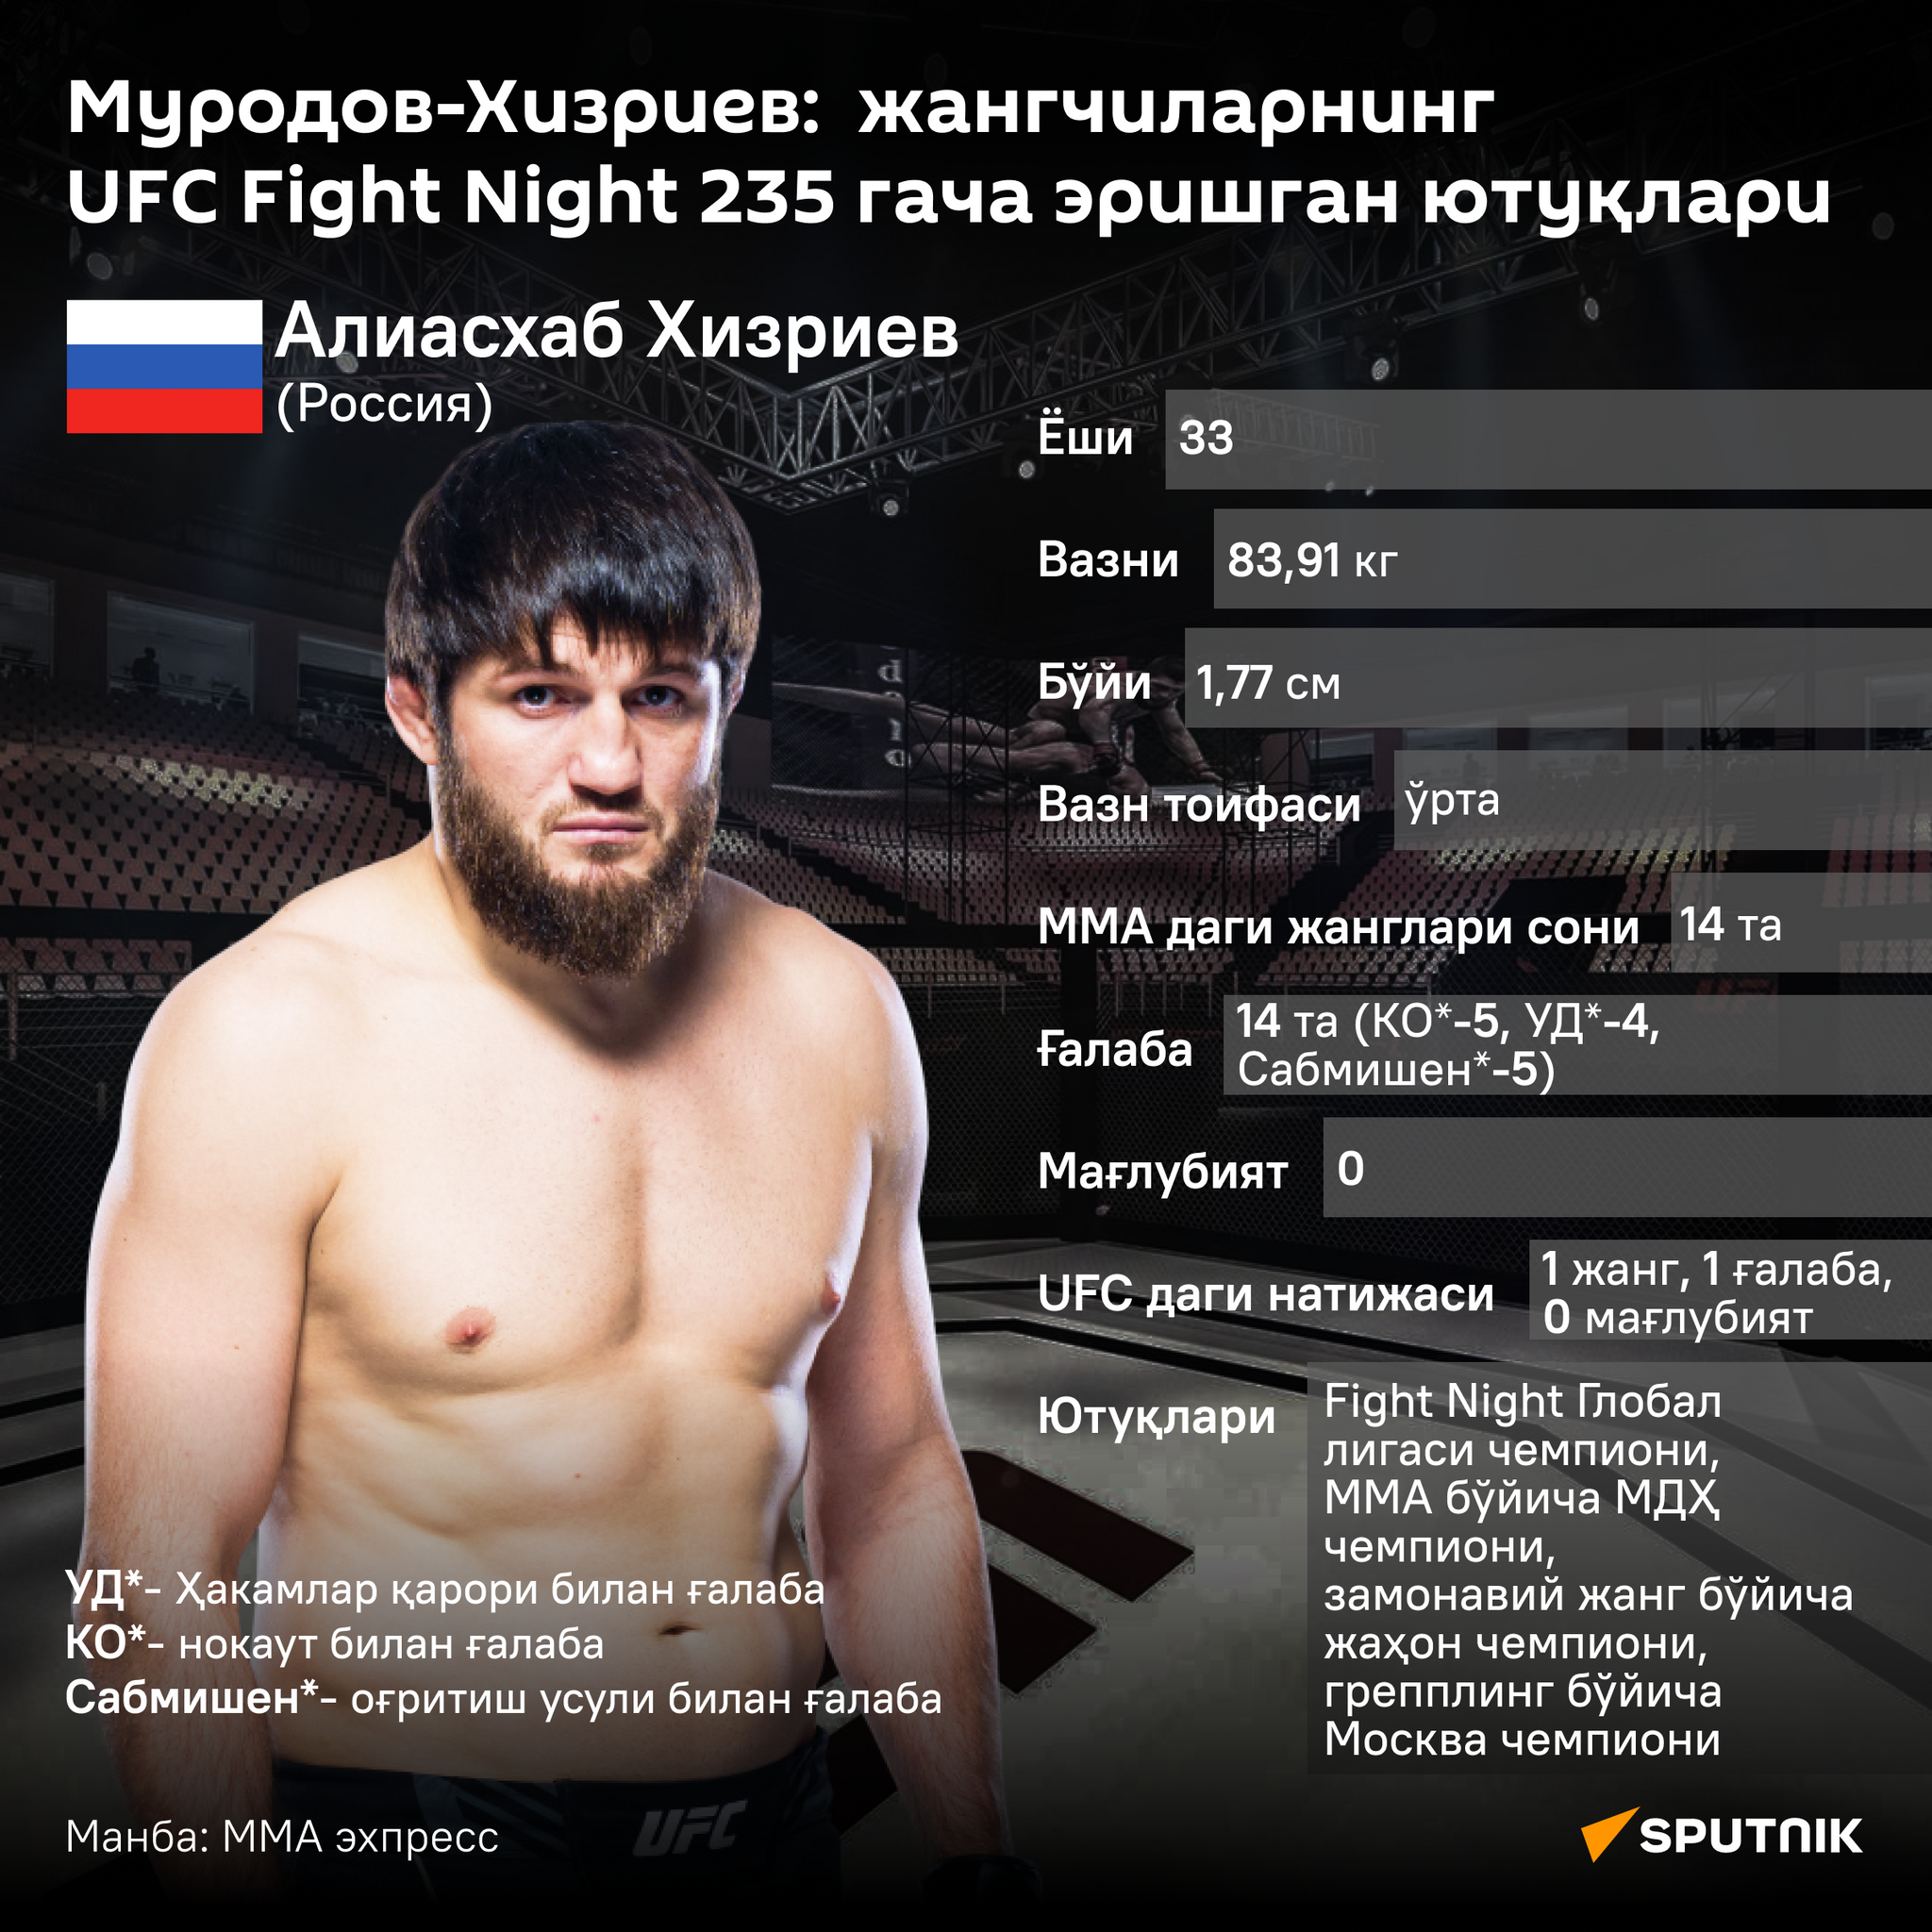 Алиасхаб Хизриев: достижения бойца до UFC Fight Night 235 инфографика узб - Sputnik Ўзбекистон